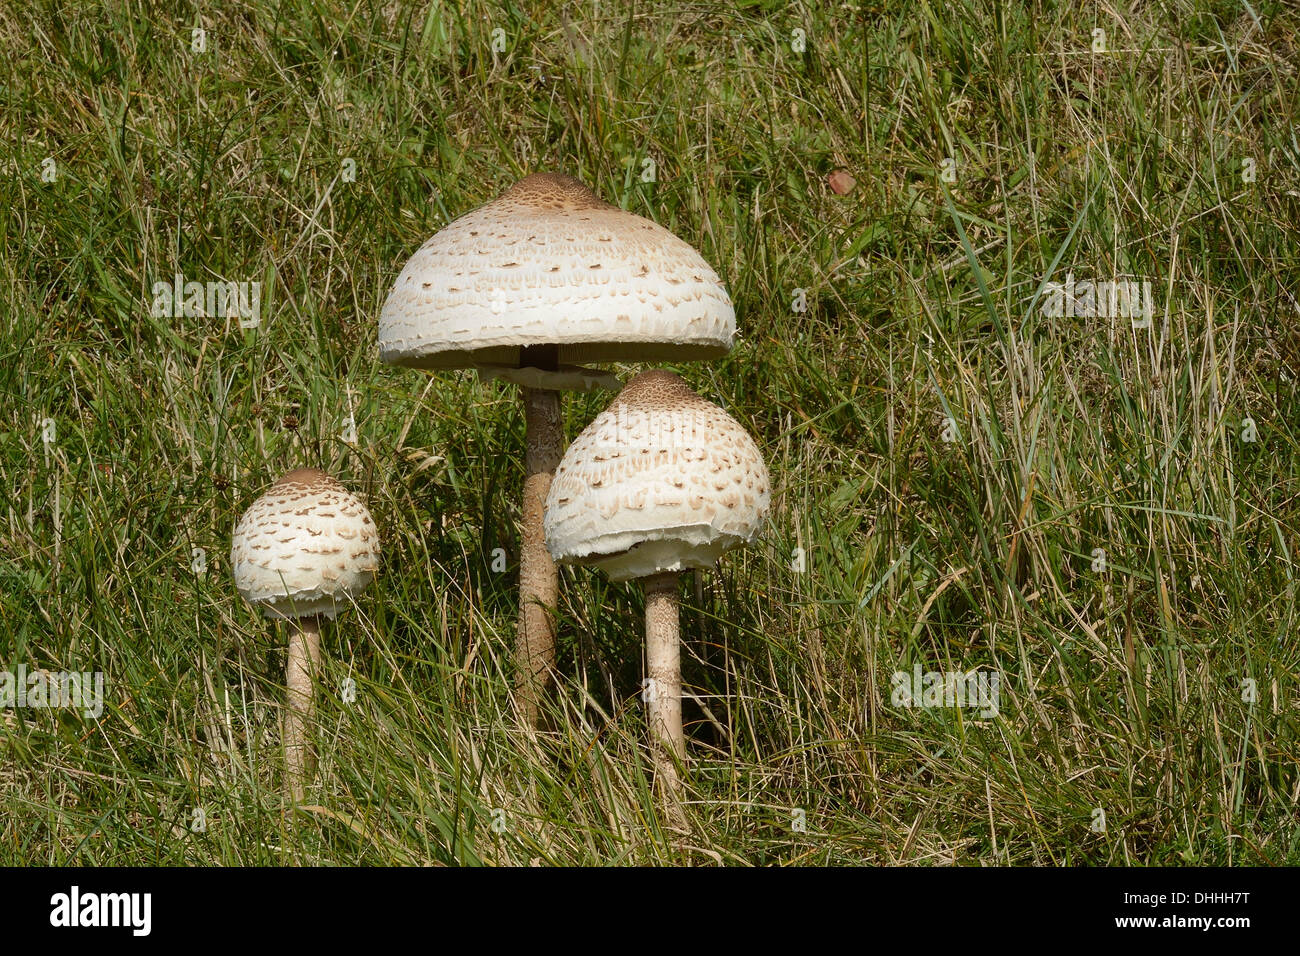 Parasol Mushrooms (Macrolepiota procera), edible mushrooms, Rømø, Denmark Stock Photo